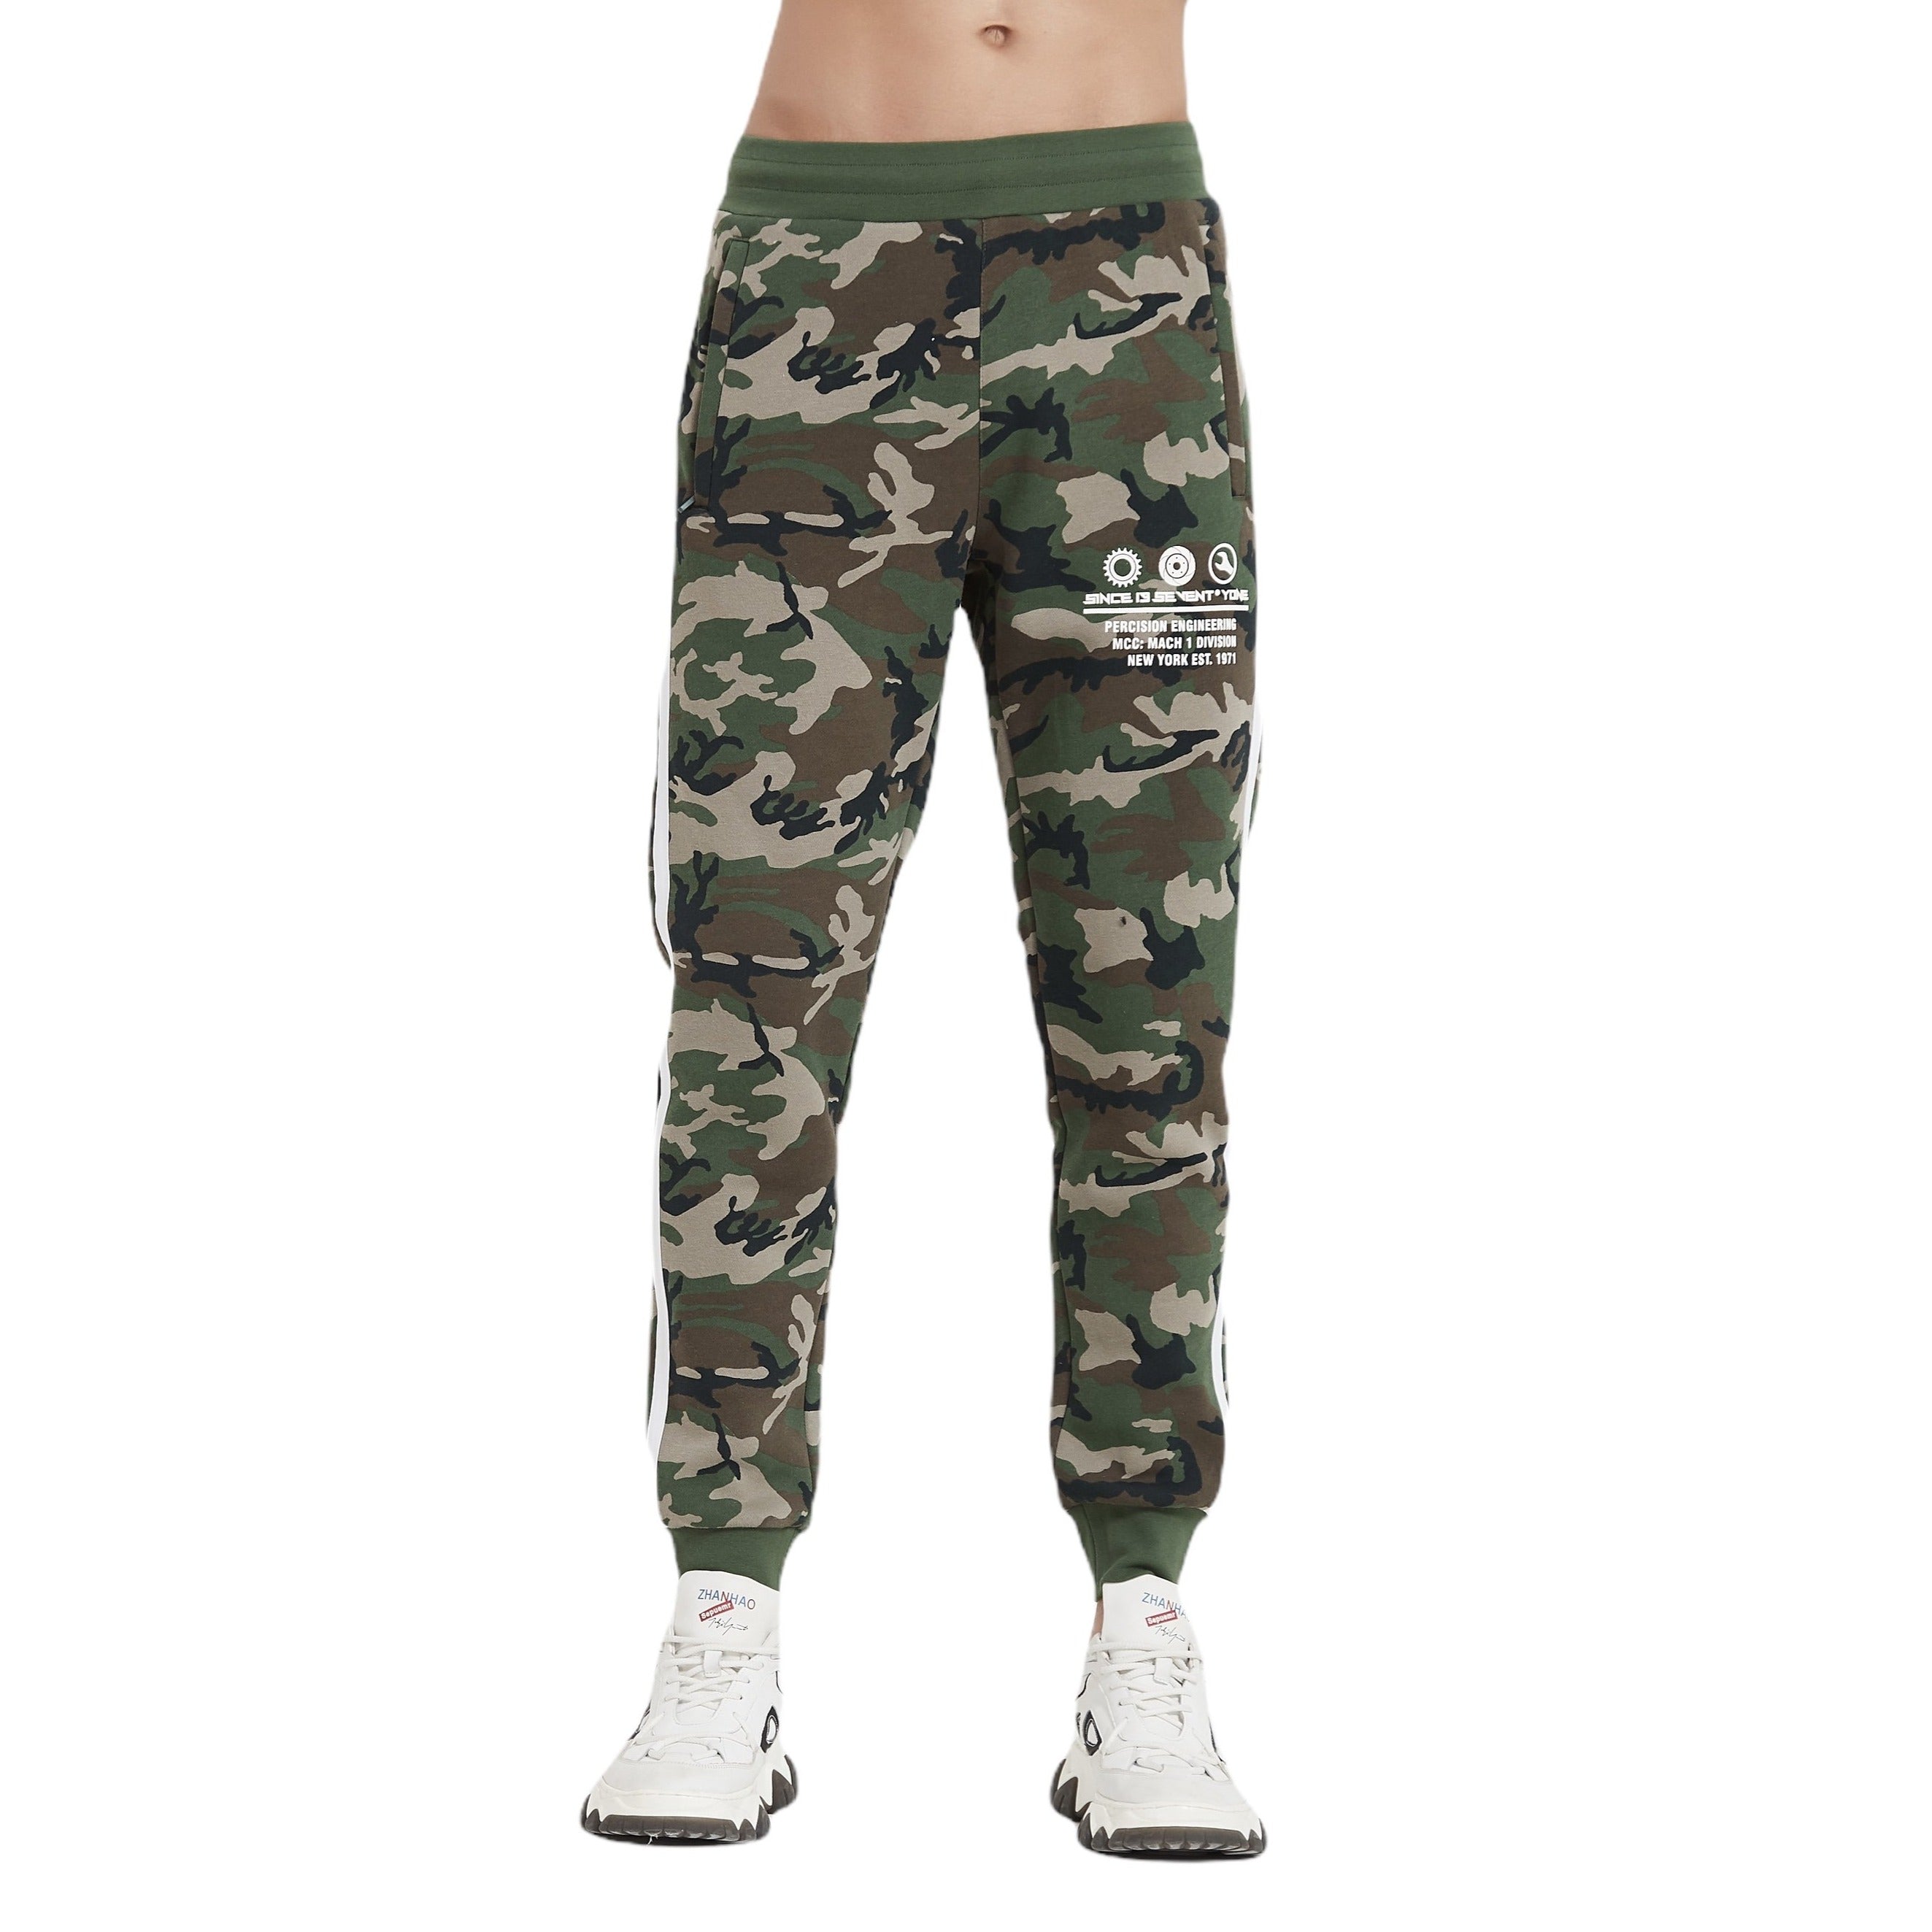 Adidas Originals Army Camo Nylon Cuffed Pants Joggers Mens Sz Medium HF4884  $90 | eBay